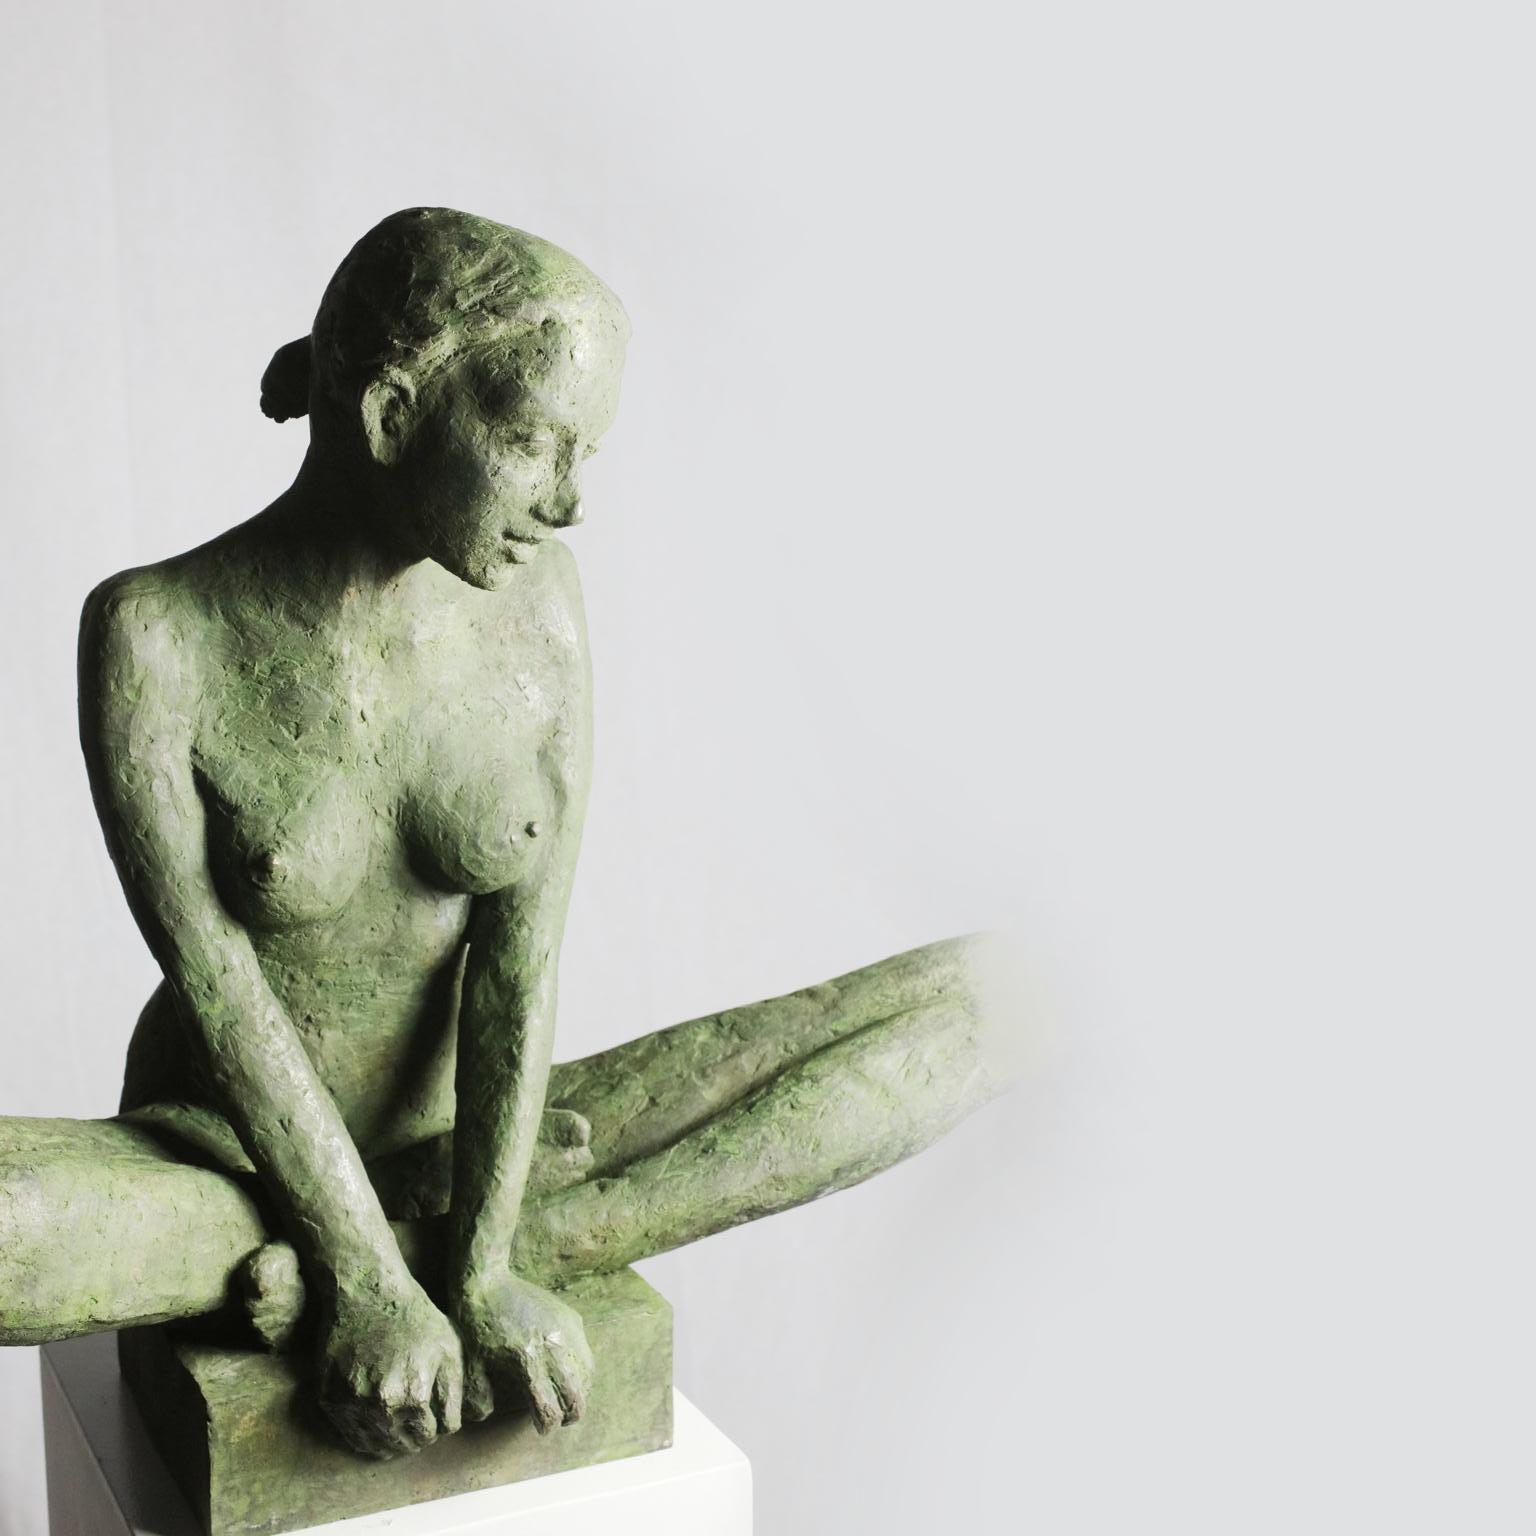 Middle - popular contemporary nude female bronze sculpture in meditative pose - Sculpture by Susanne Kraisser